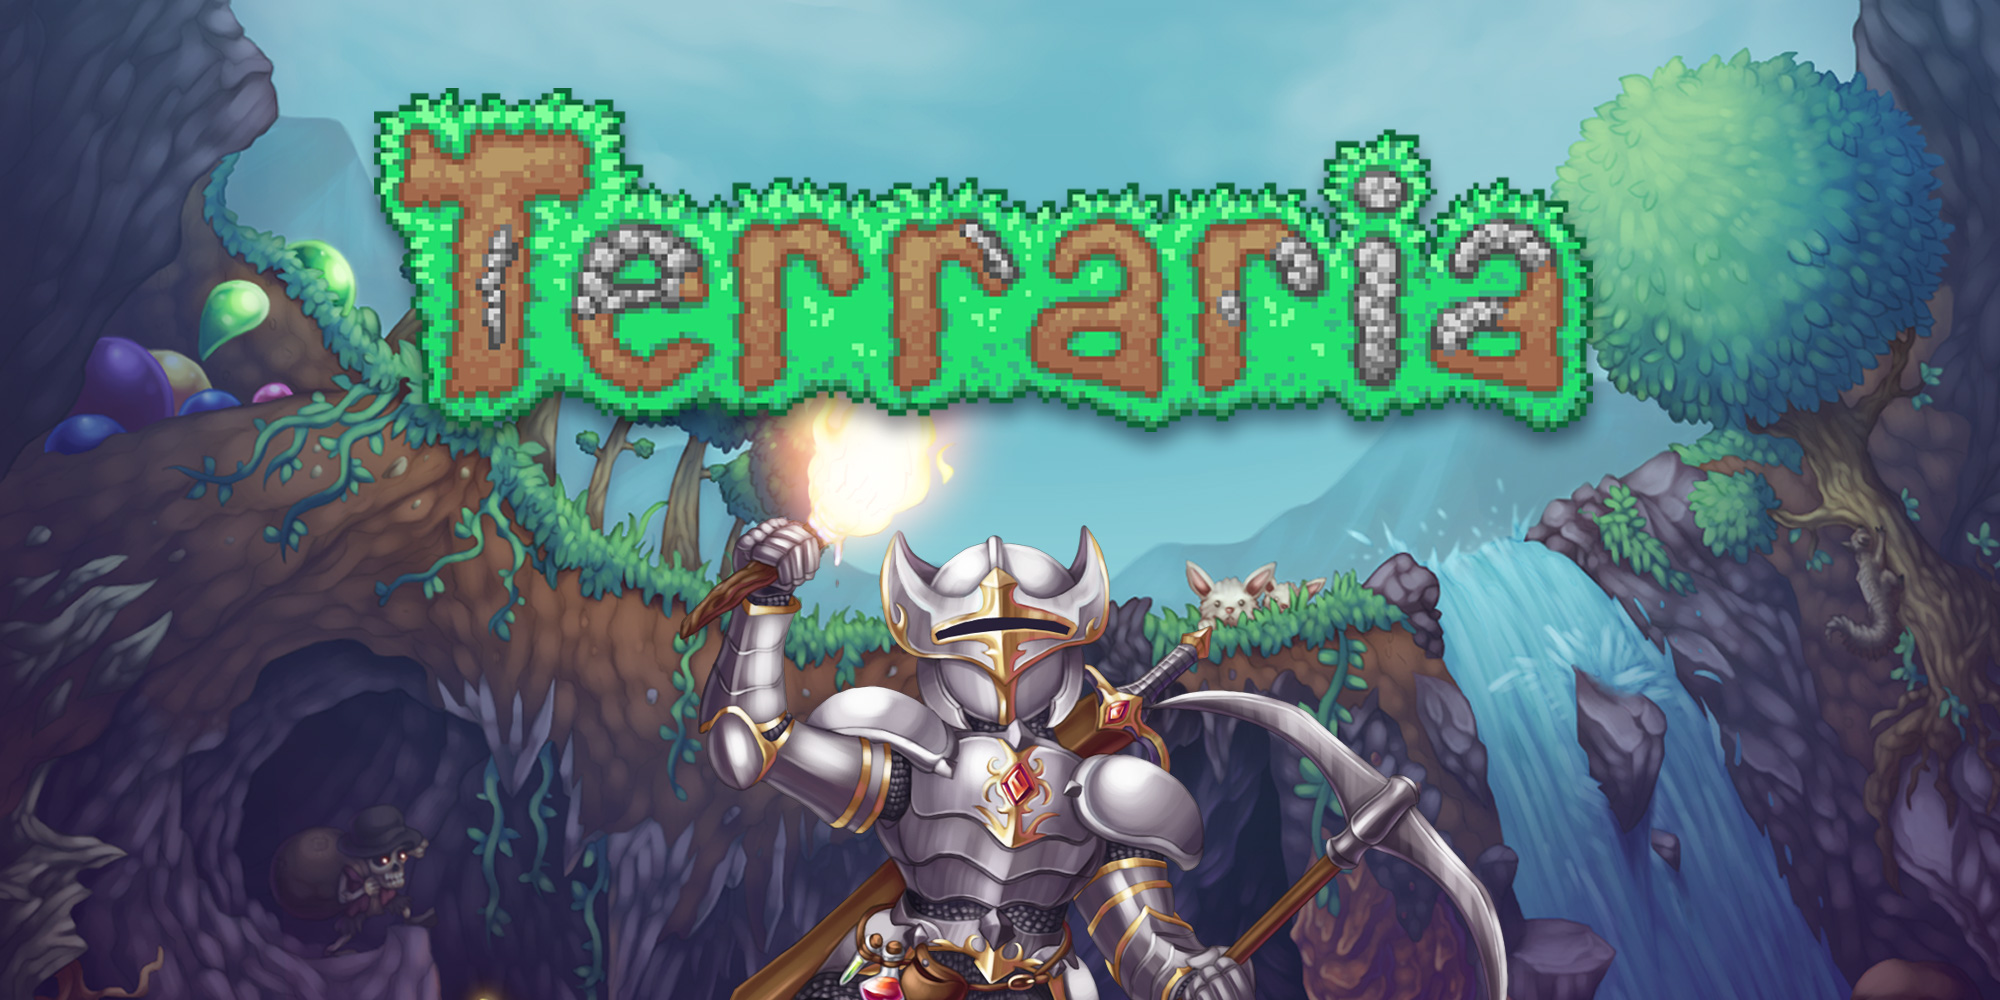 terraria class guide 1.3